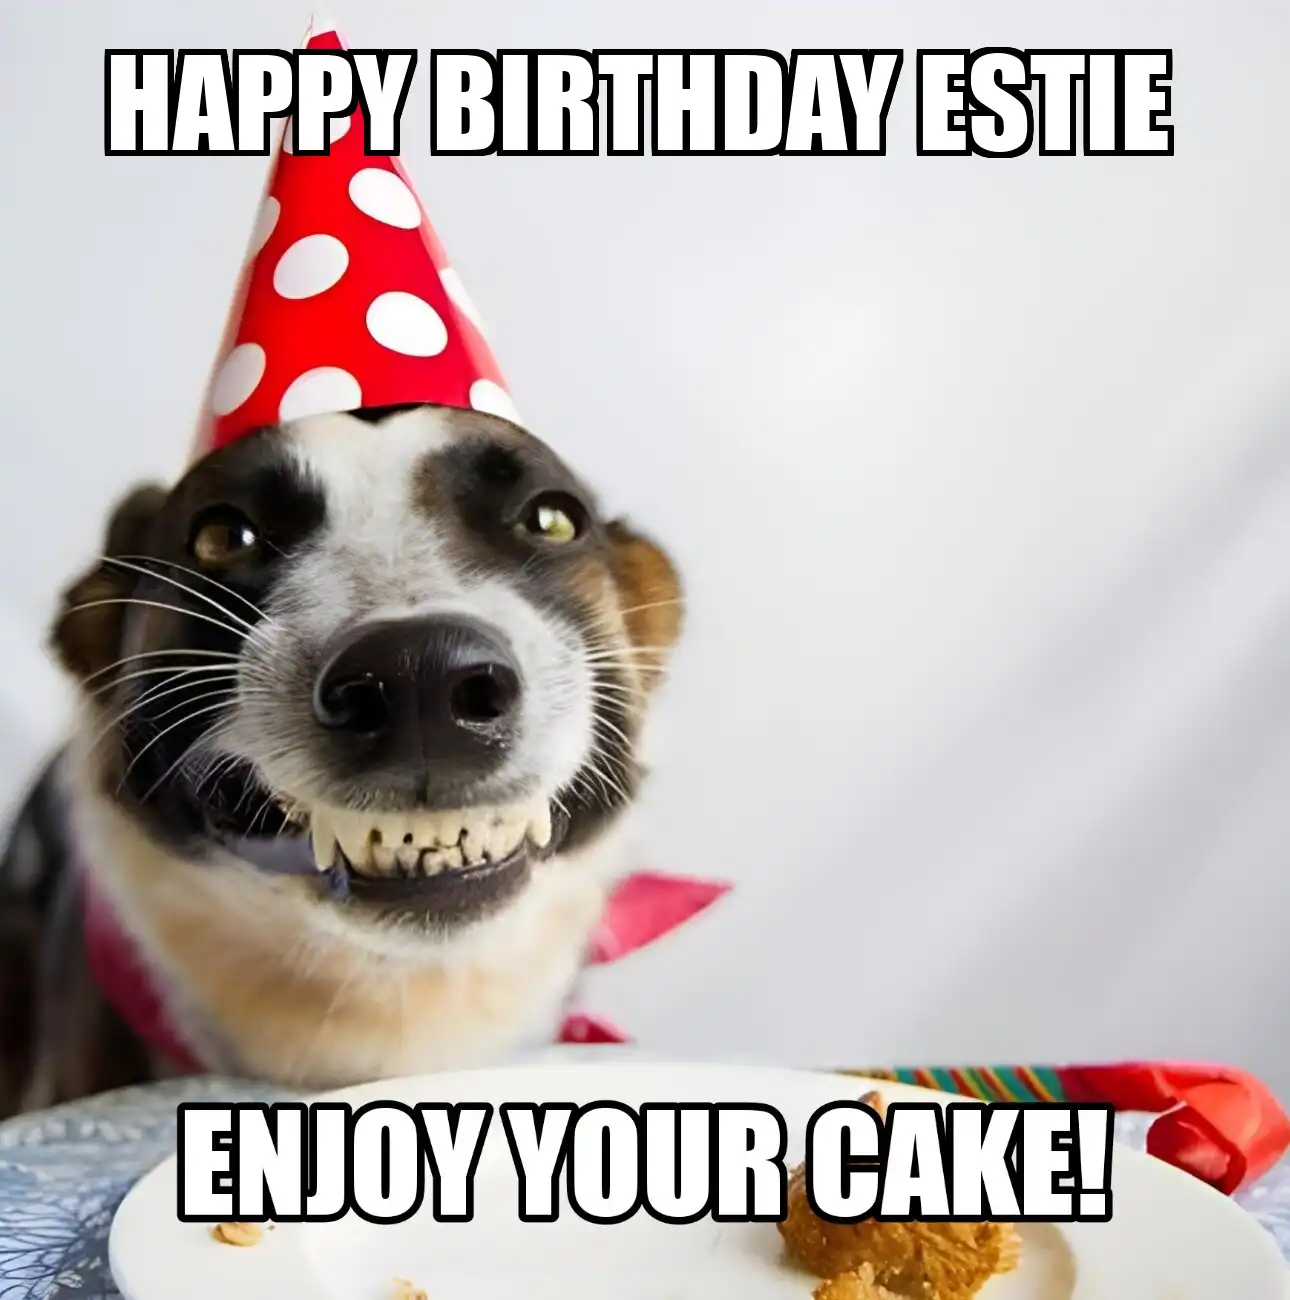 Happy Birthday Estie Enjoy Your Cake Dog Meme